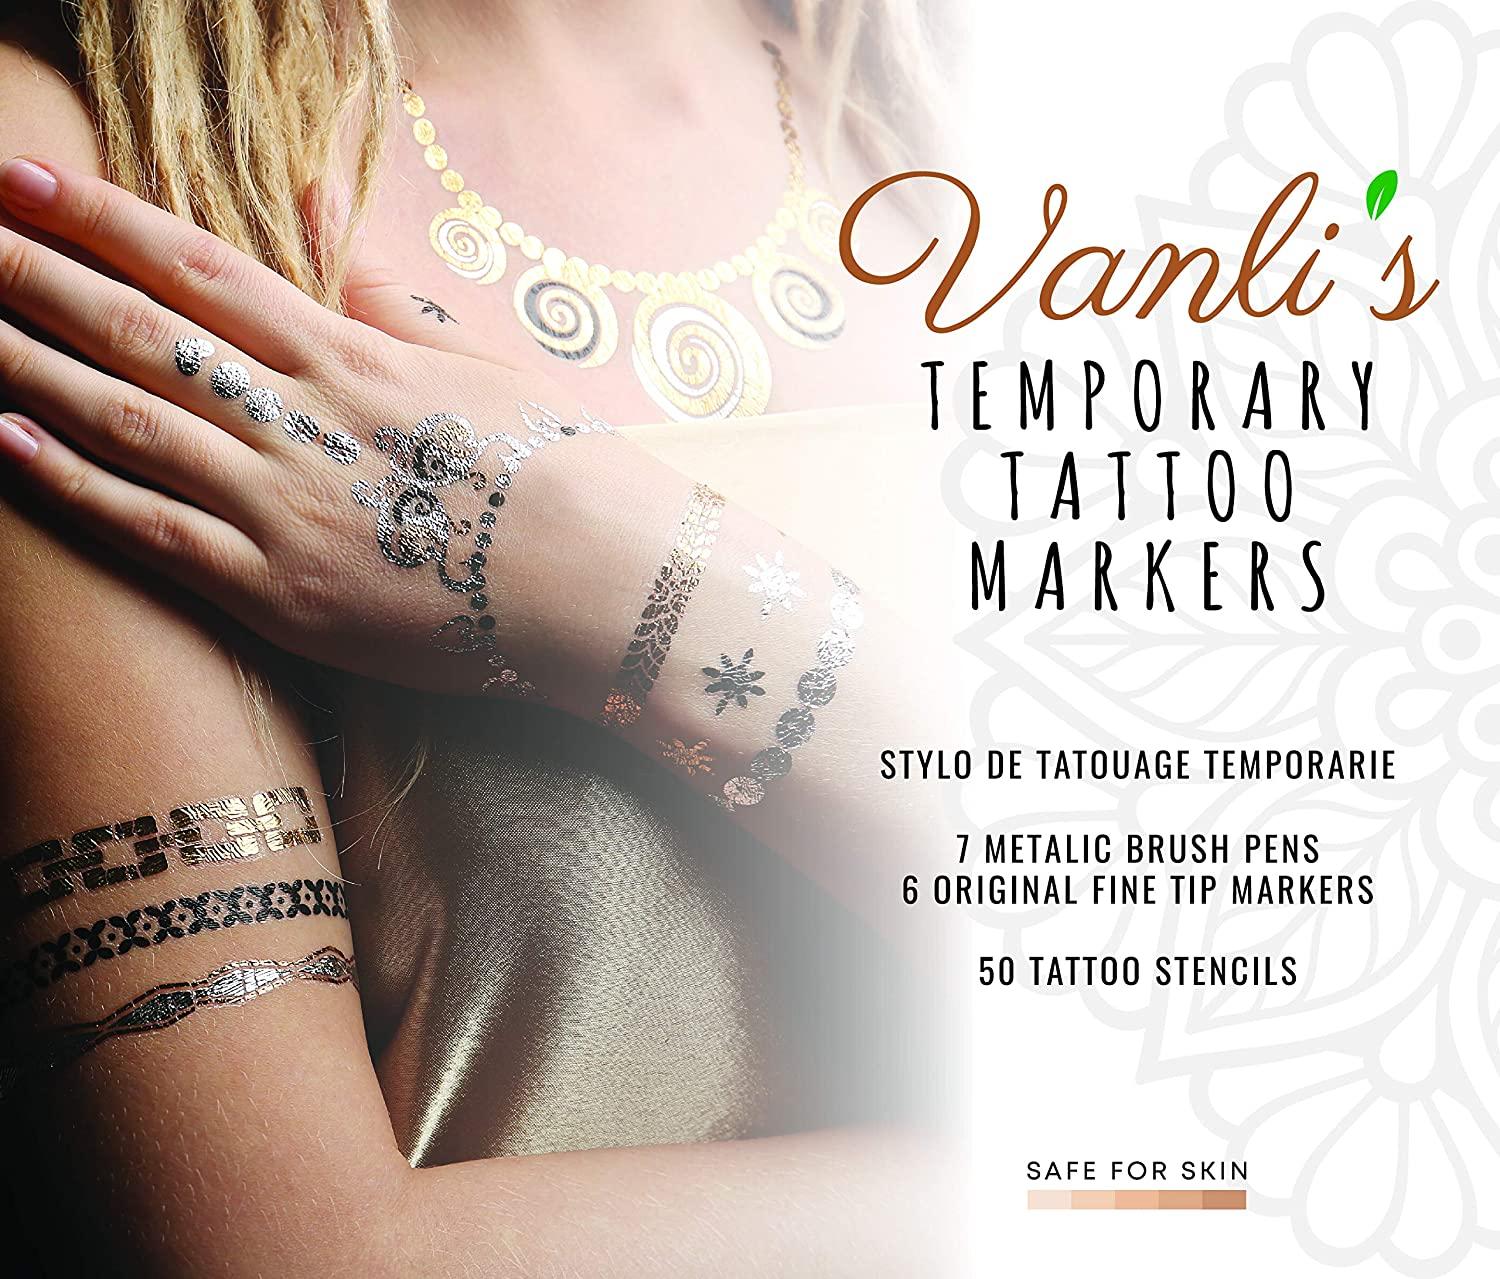 Vanli's Temporary Tattoo Markers - Stocking Stuffers For Teens